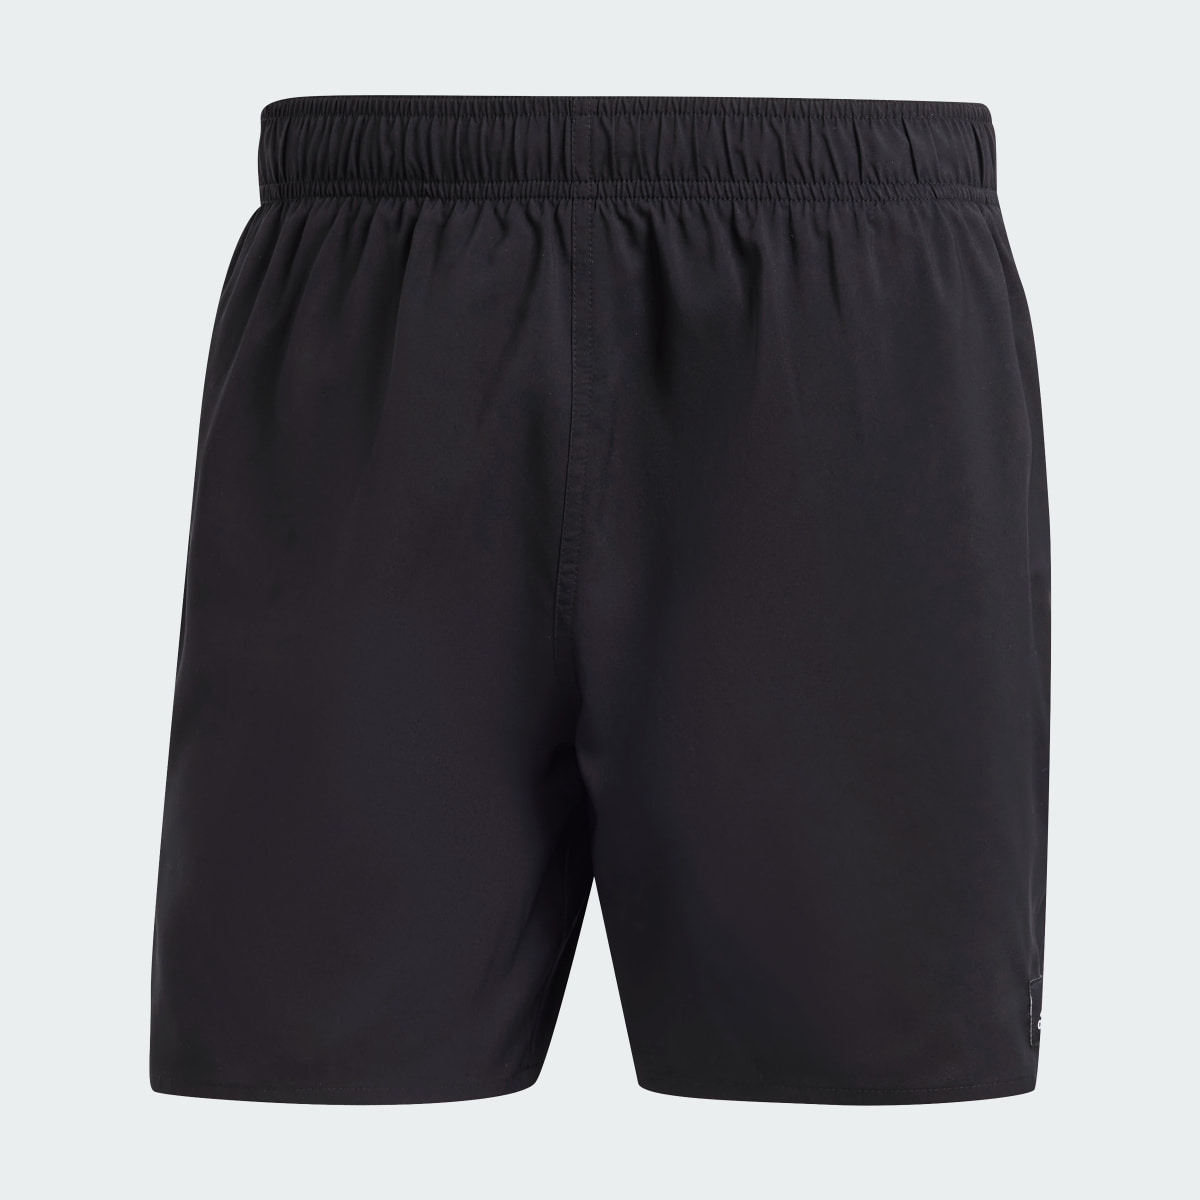 Adidas Solid CLX Short-Length Swim Shorts. 5